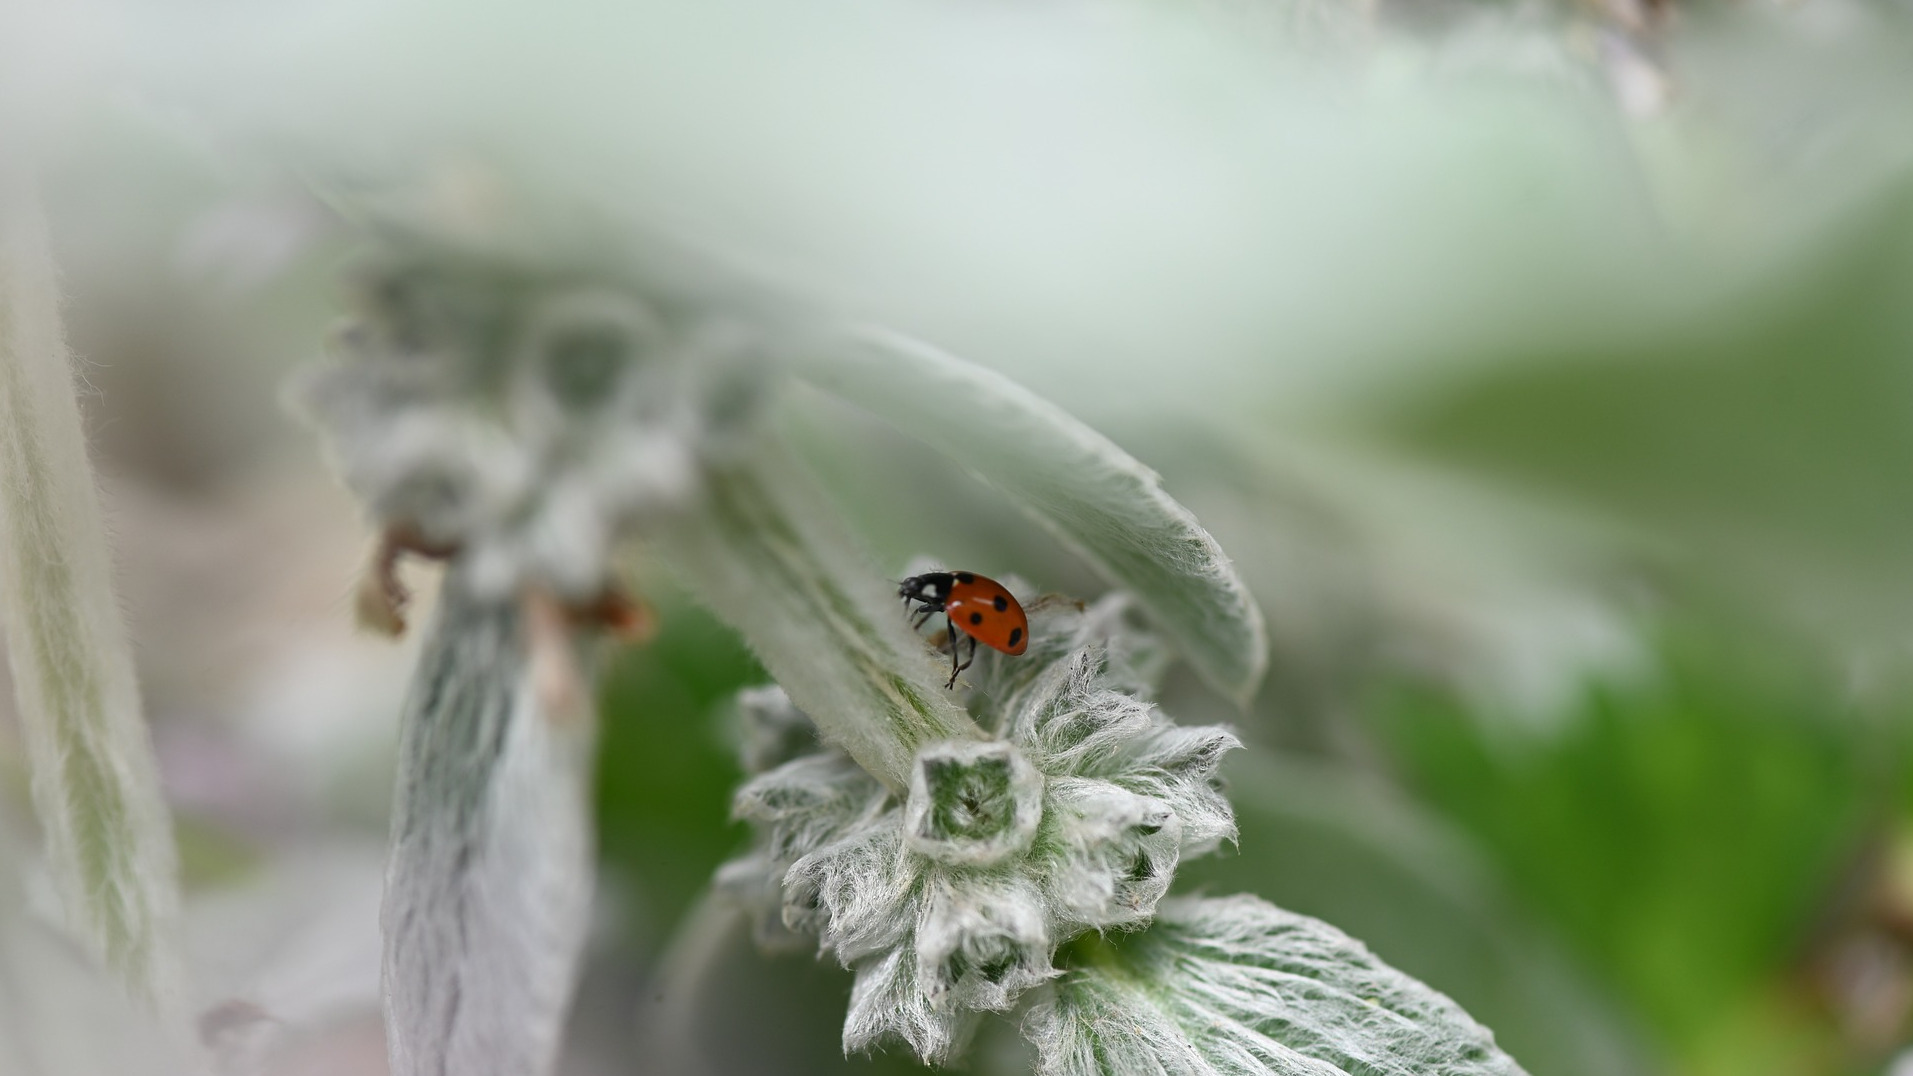 Lady bug on a white sage plant.